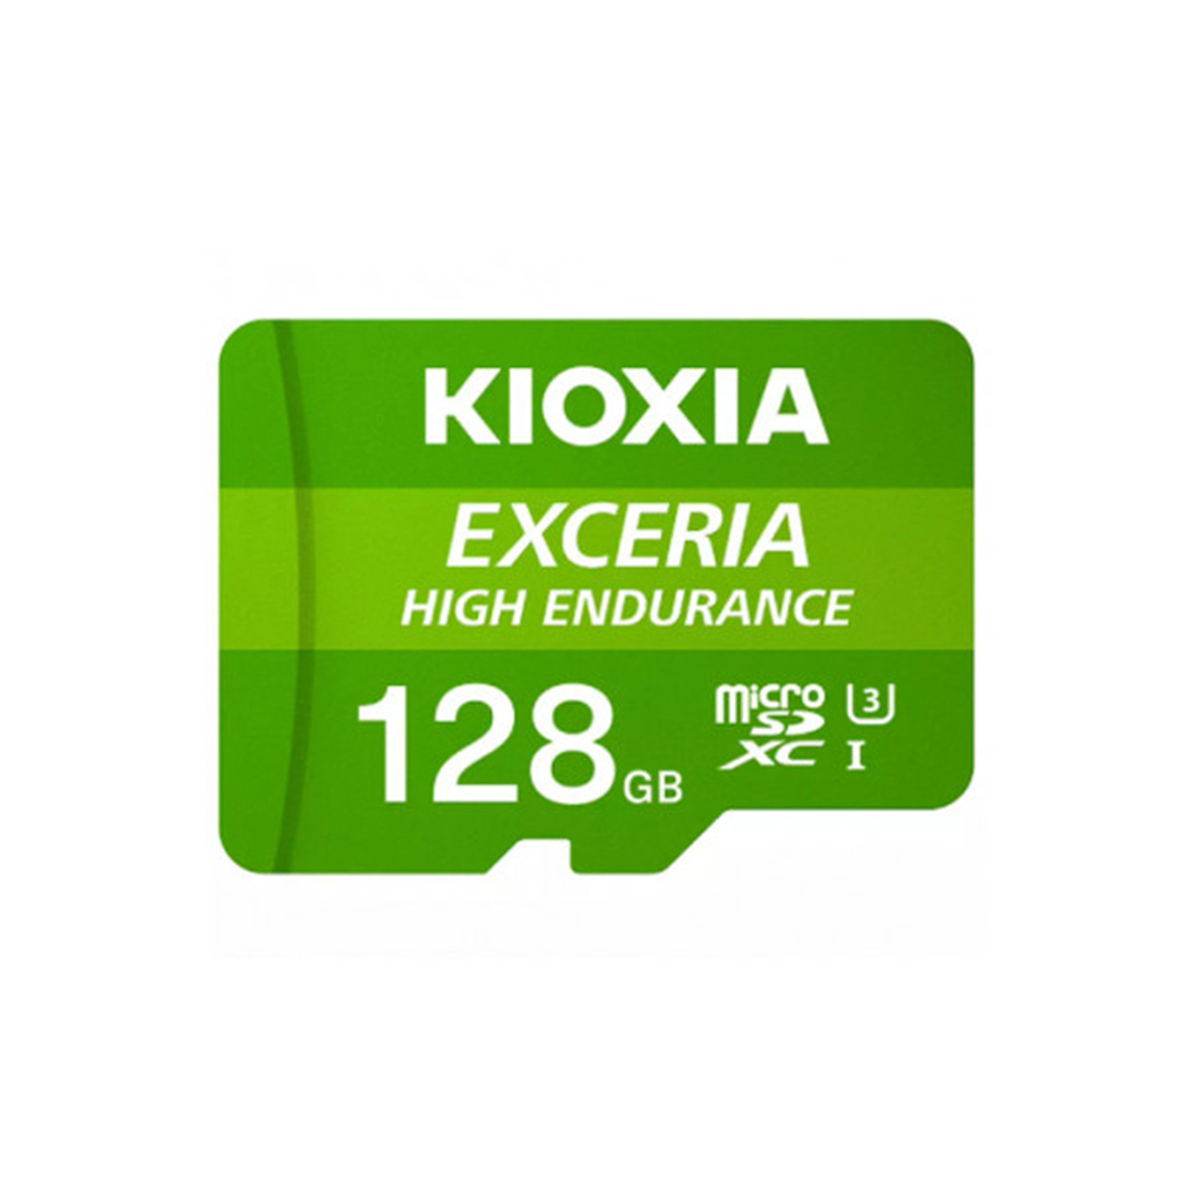 Kioxia U3 microSD Exceria High Endurance Flash Memory Card  LMHE1G 128GB